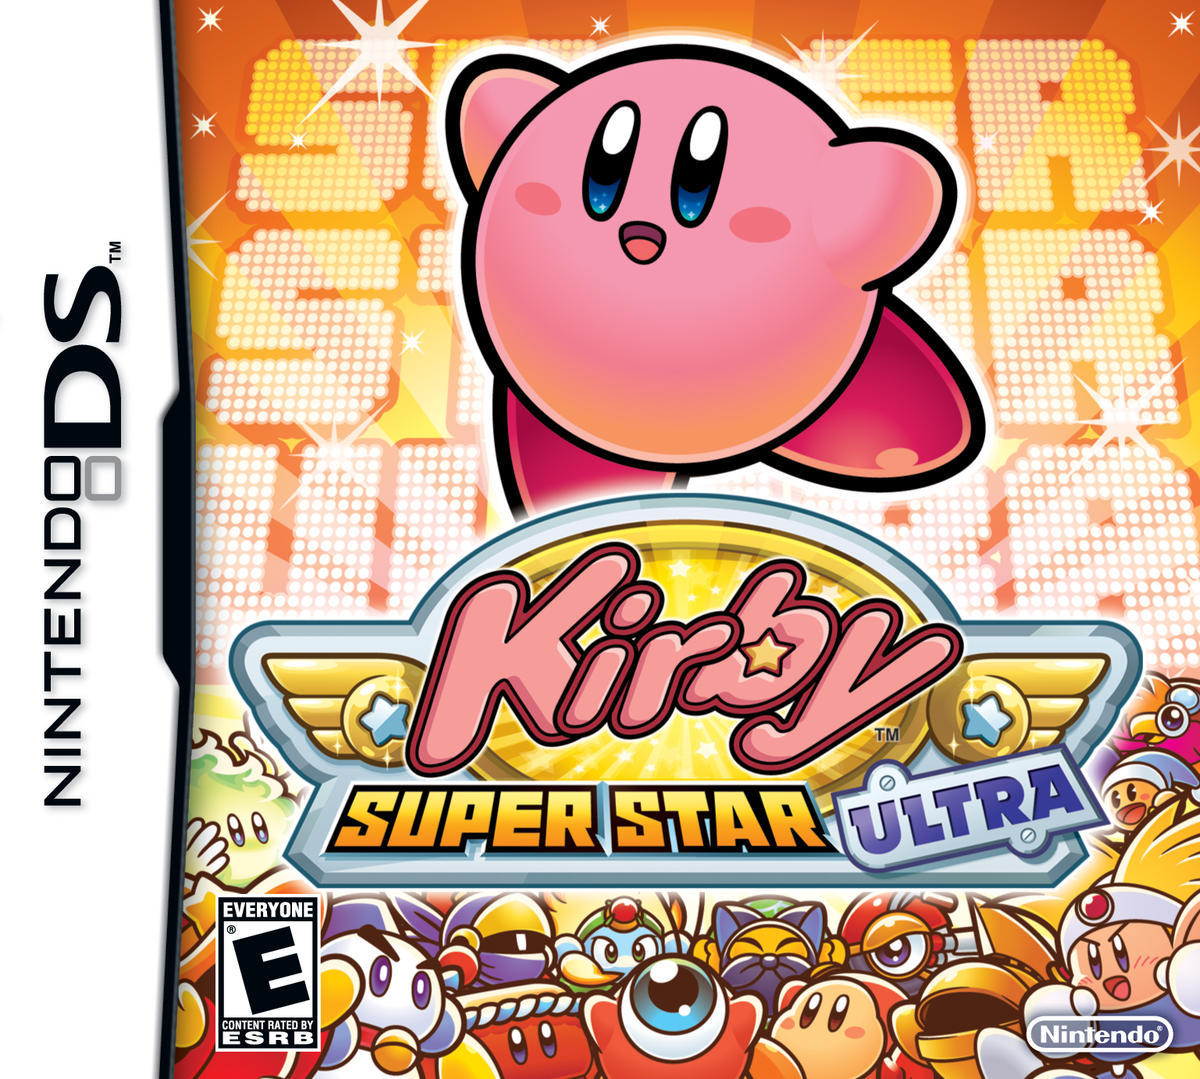 Hammer - WiKirby: it's a wiki, about Kirby!